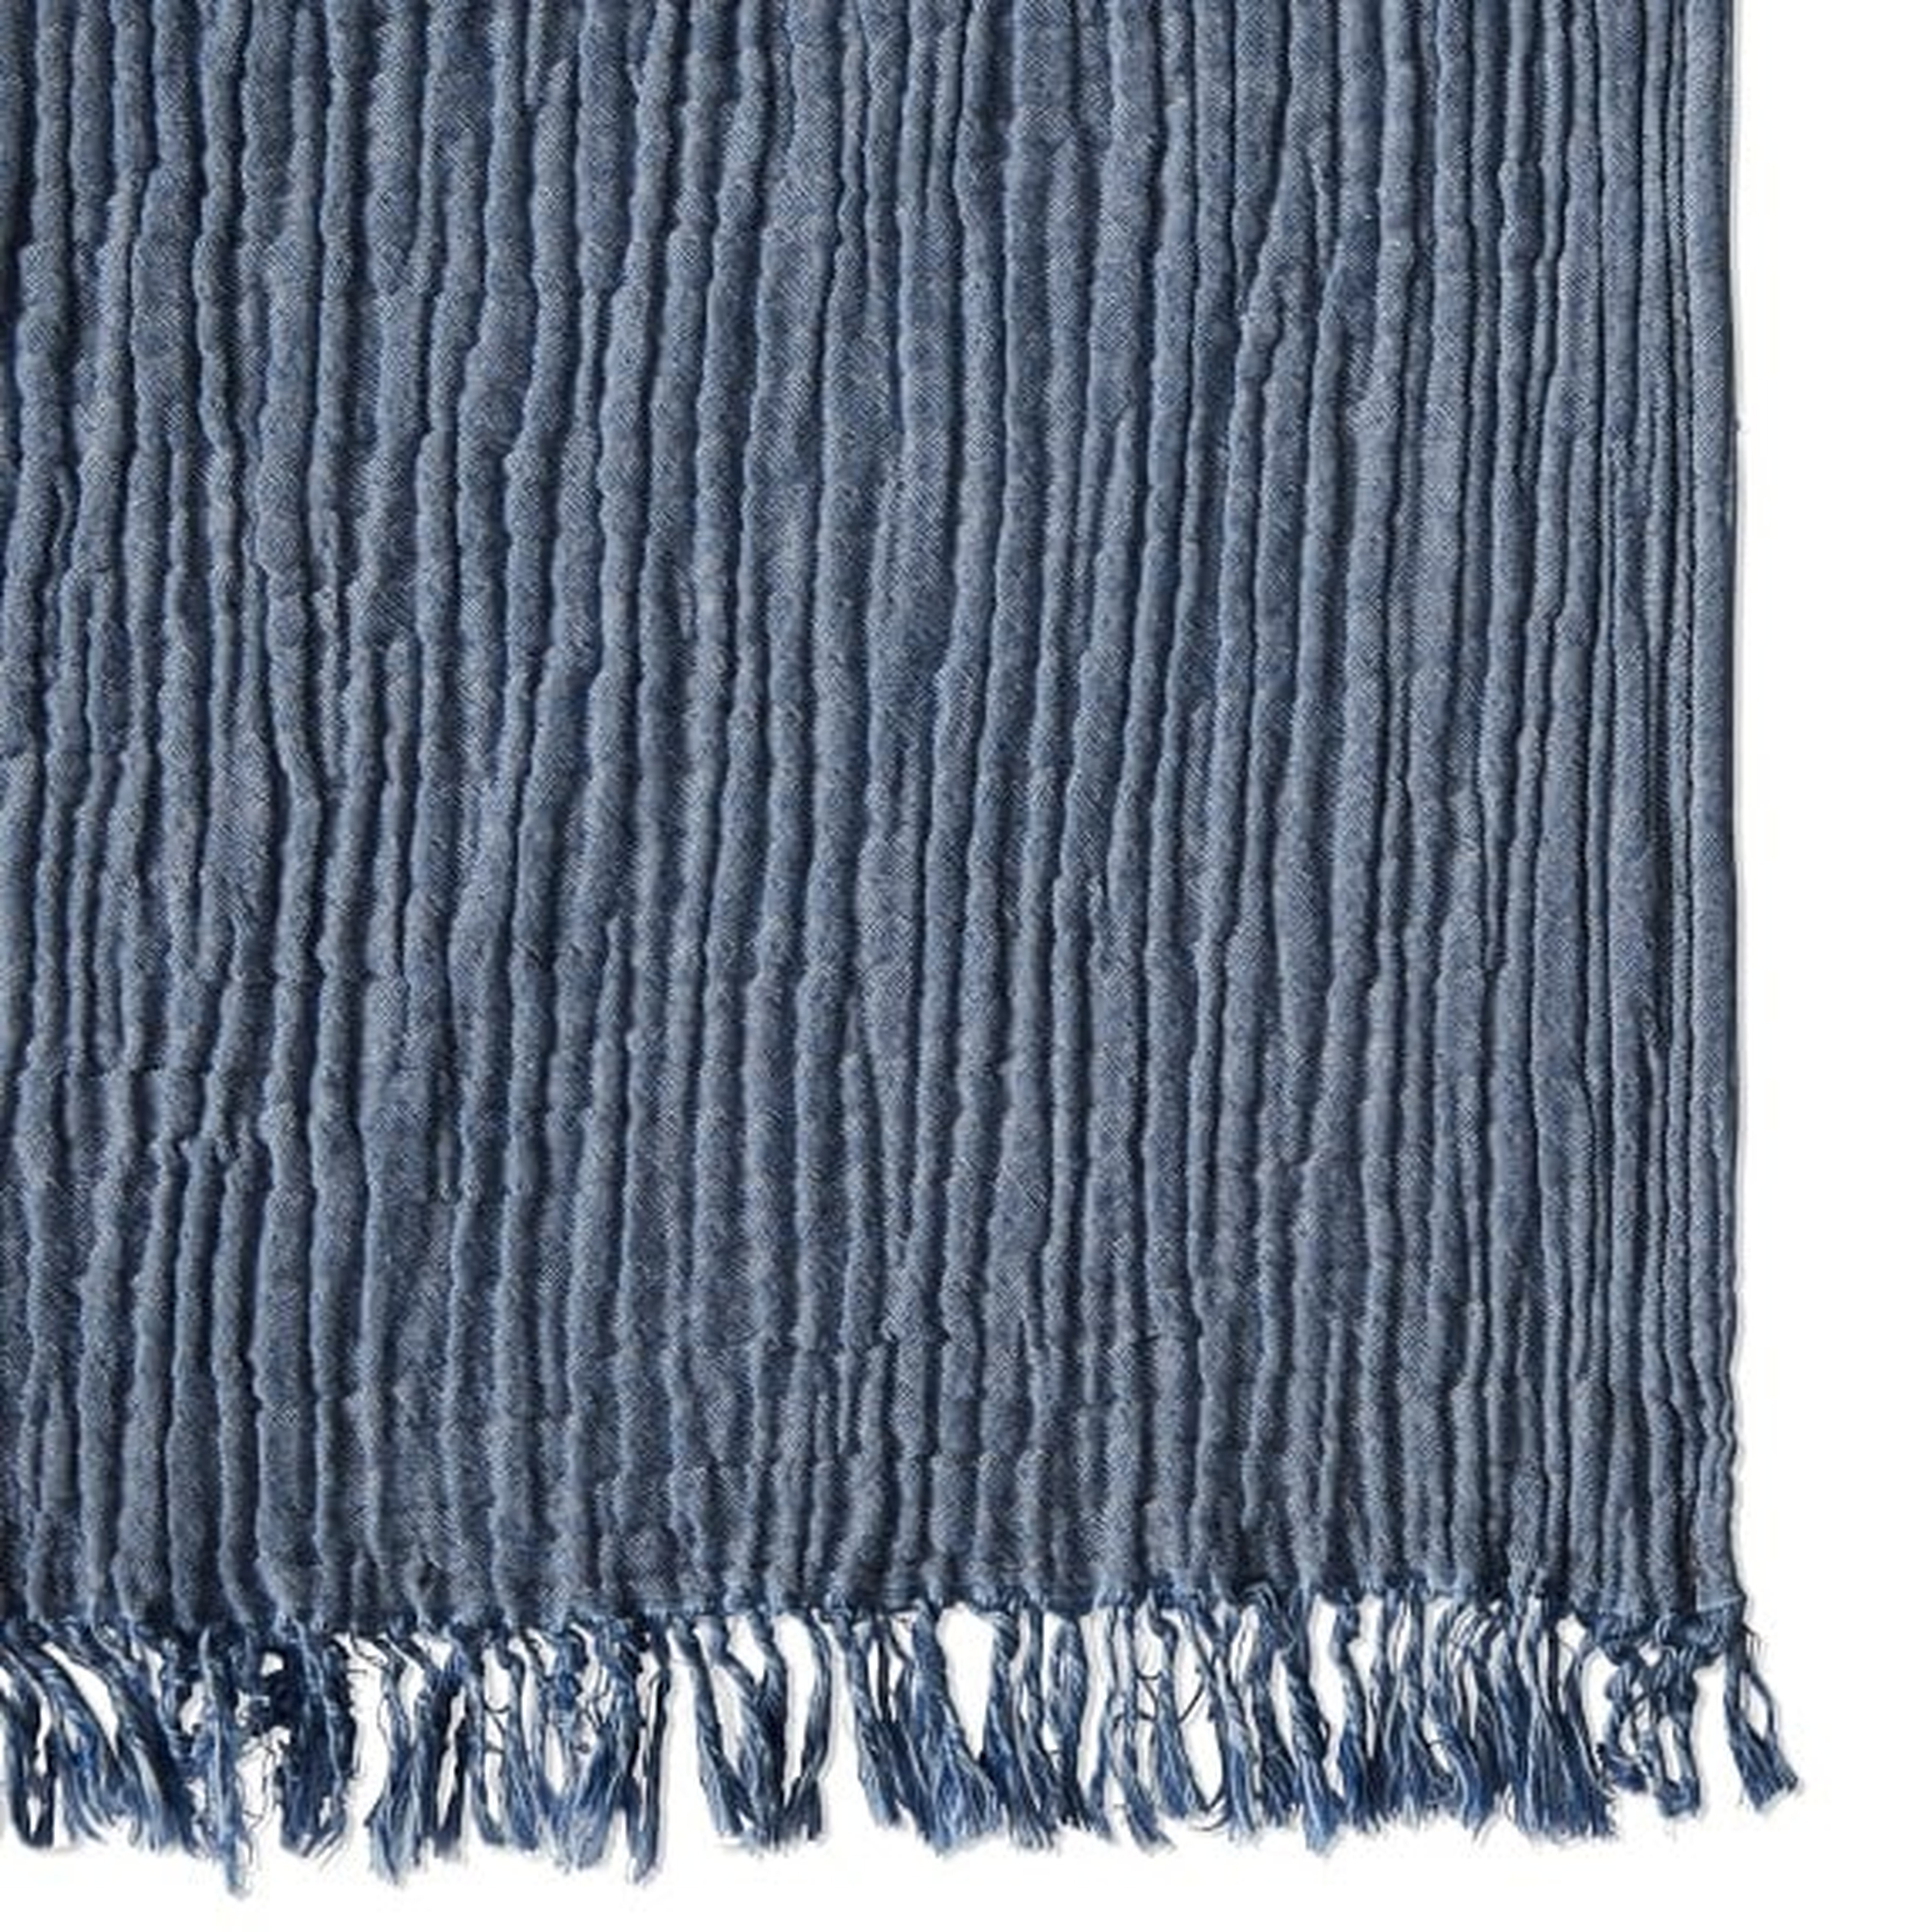 Cocoon Cotton Blanket, 90" X 90", Blue - Williams Sonoma Home